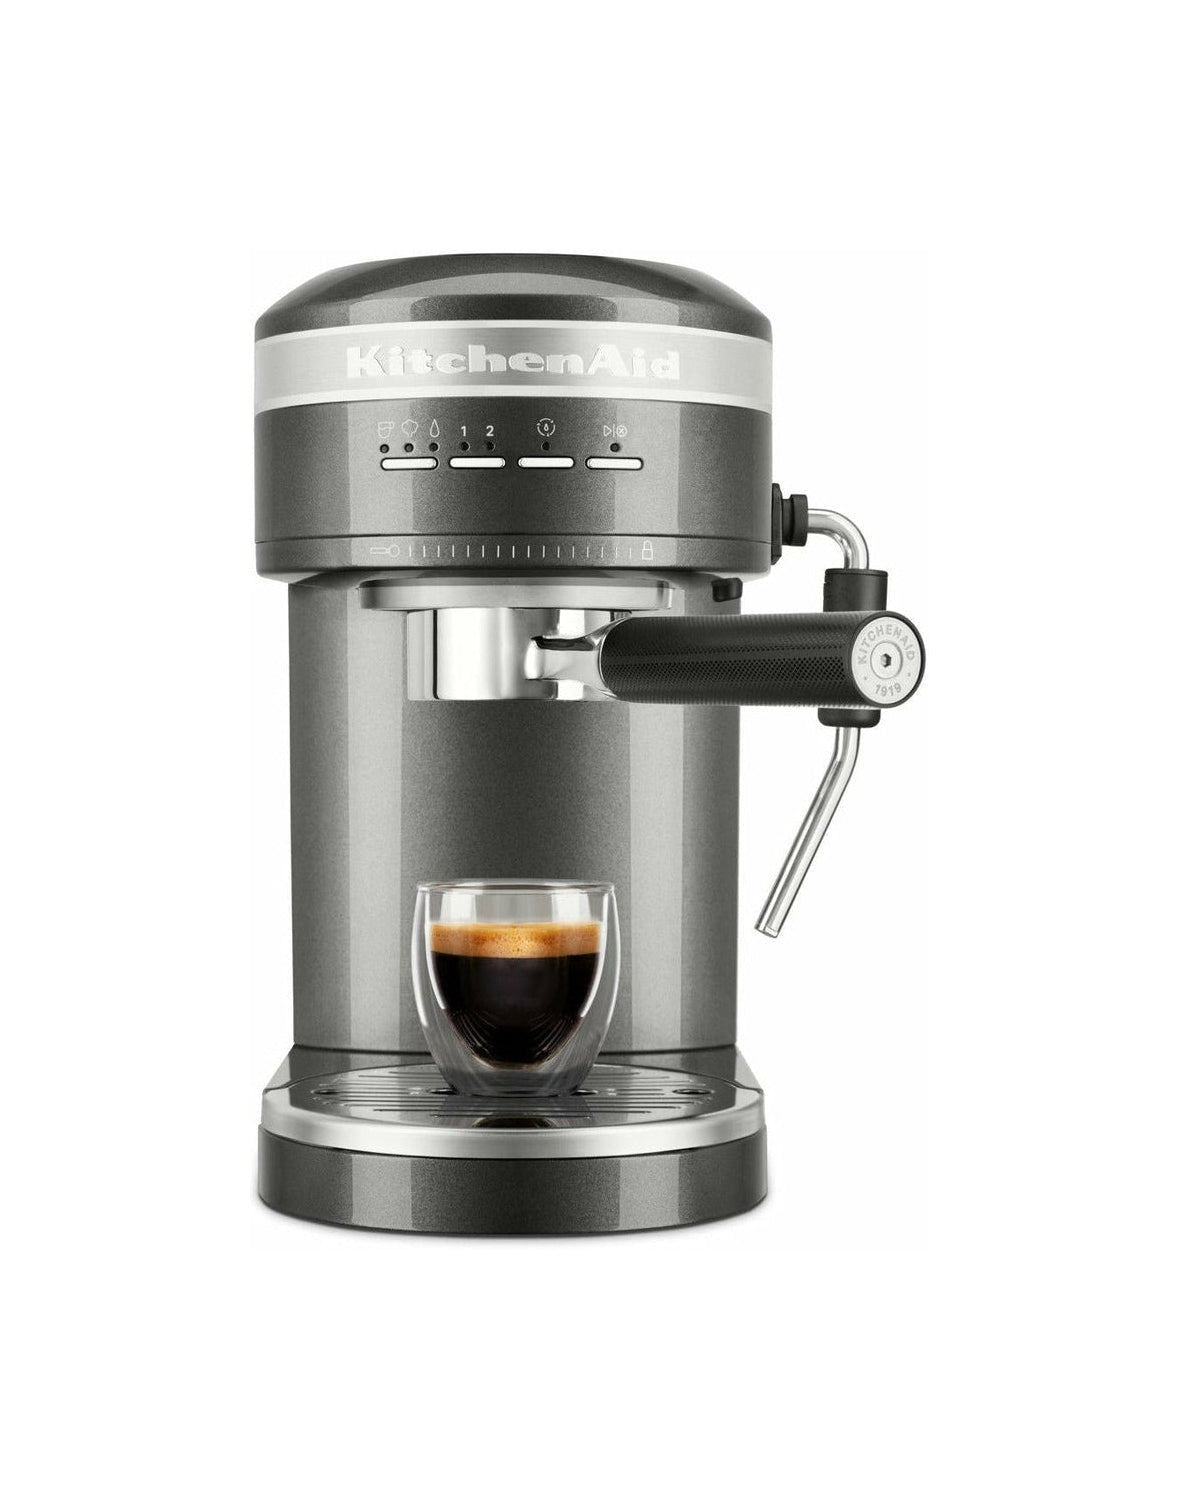 Køkkenhjælp 5 KES6503 Artisan Semi Automatic Espresso Machine, Medallion Silver